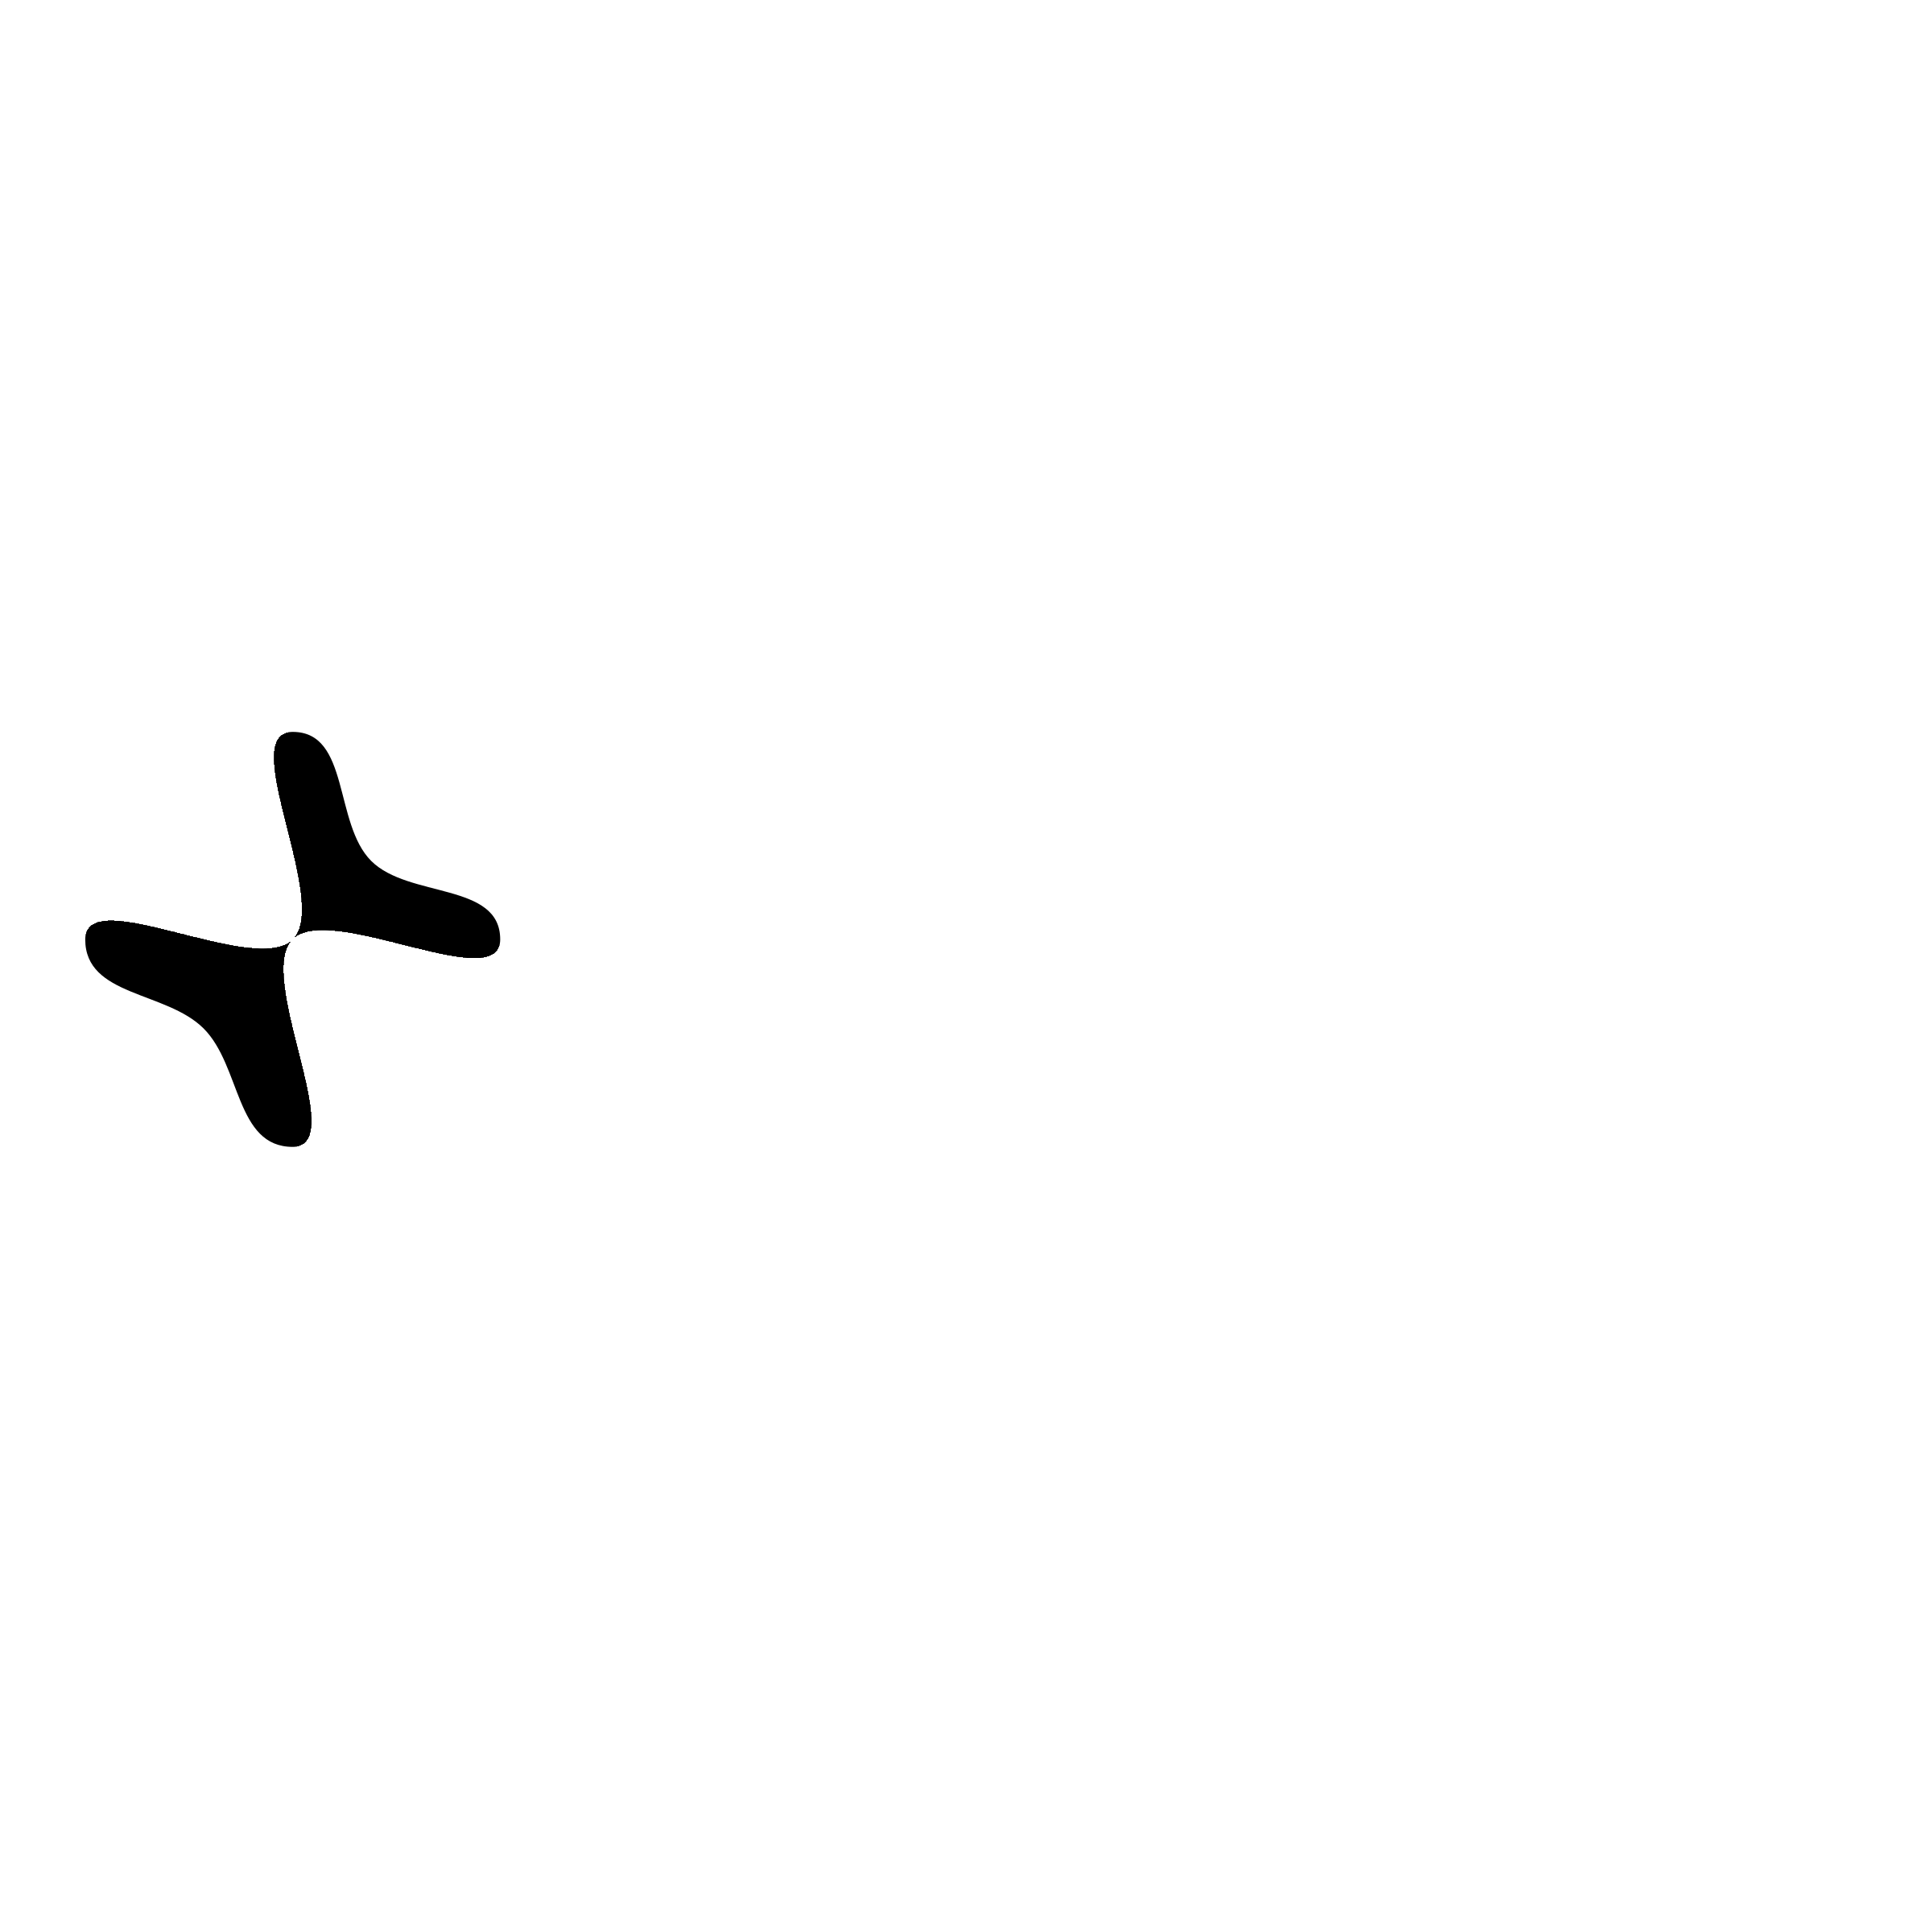 Engage Logo PNG Transparent & SVG Vector.